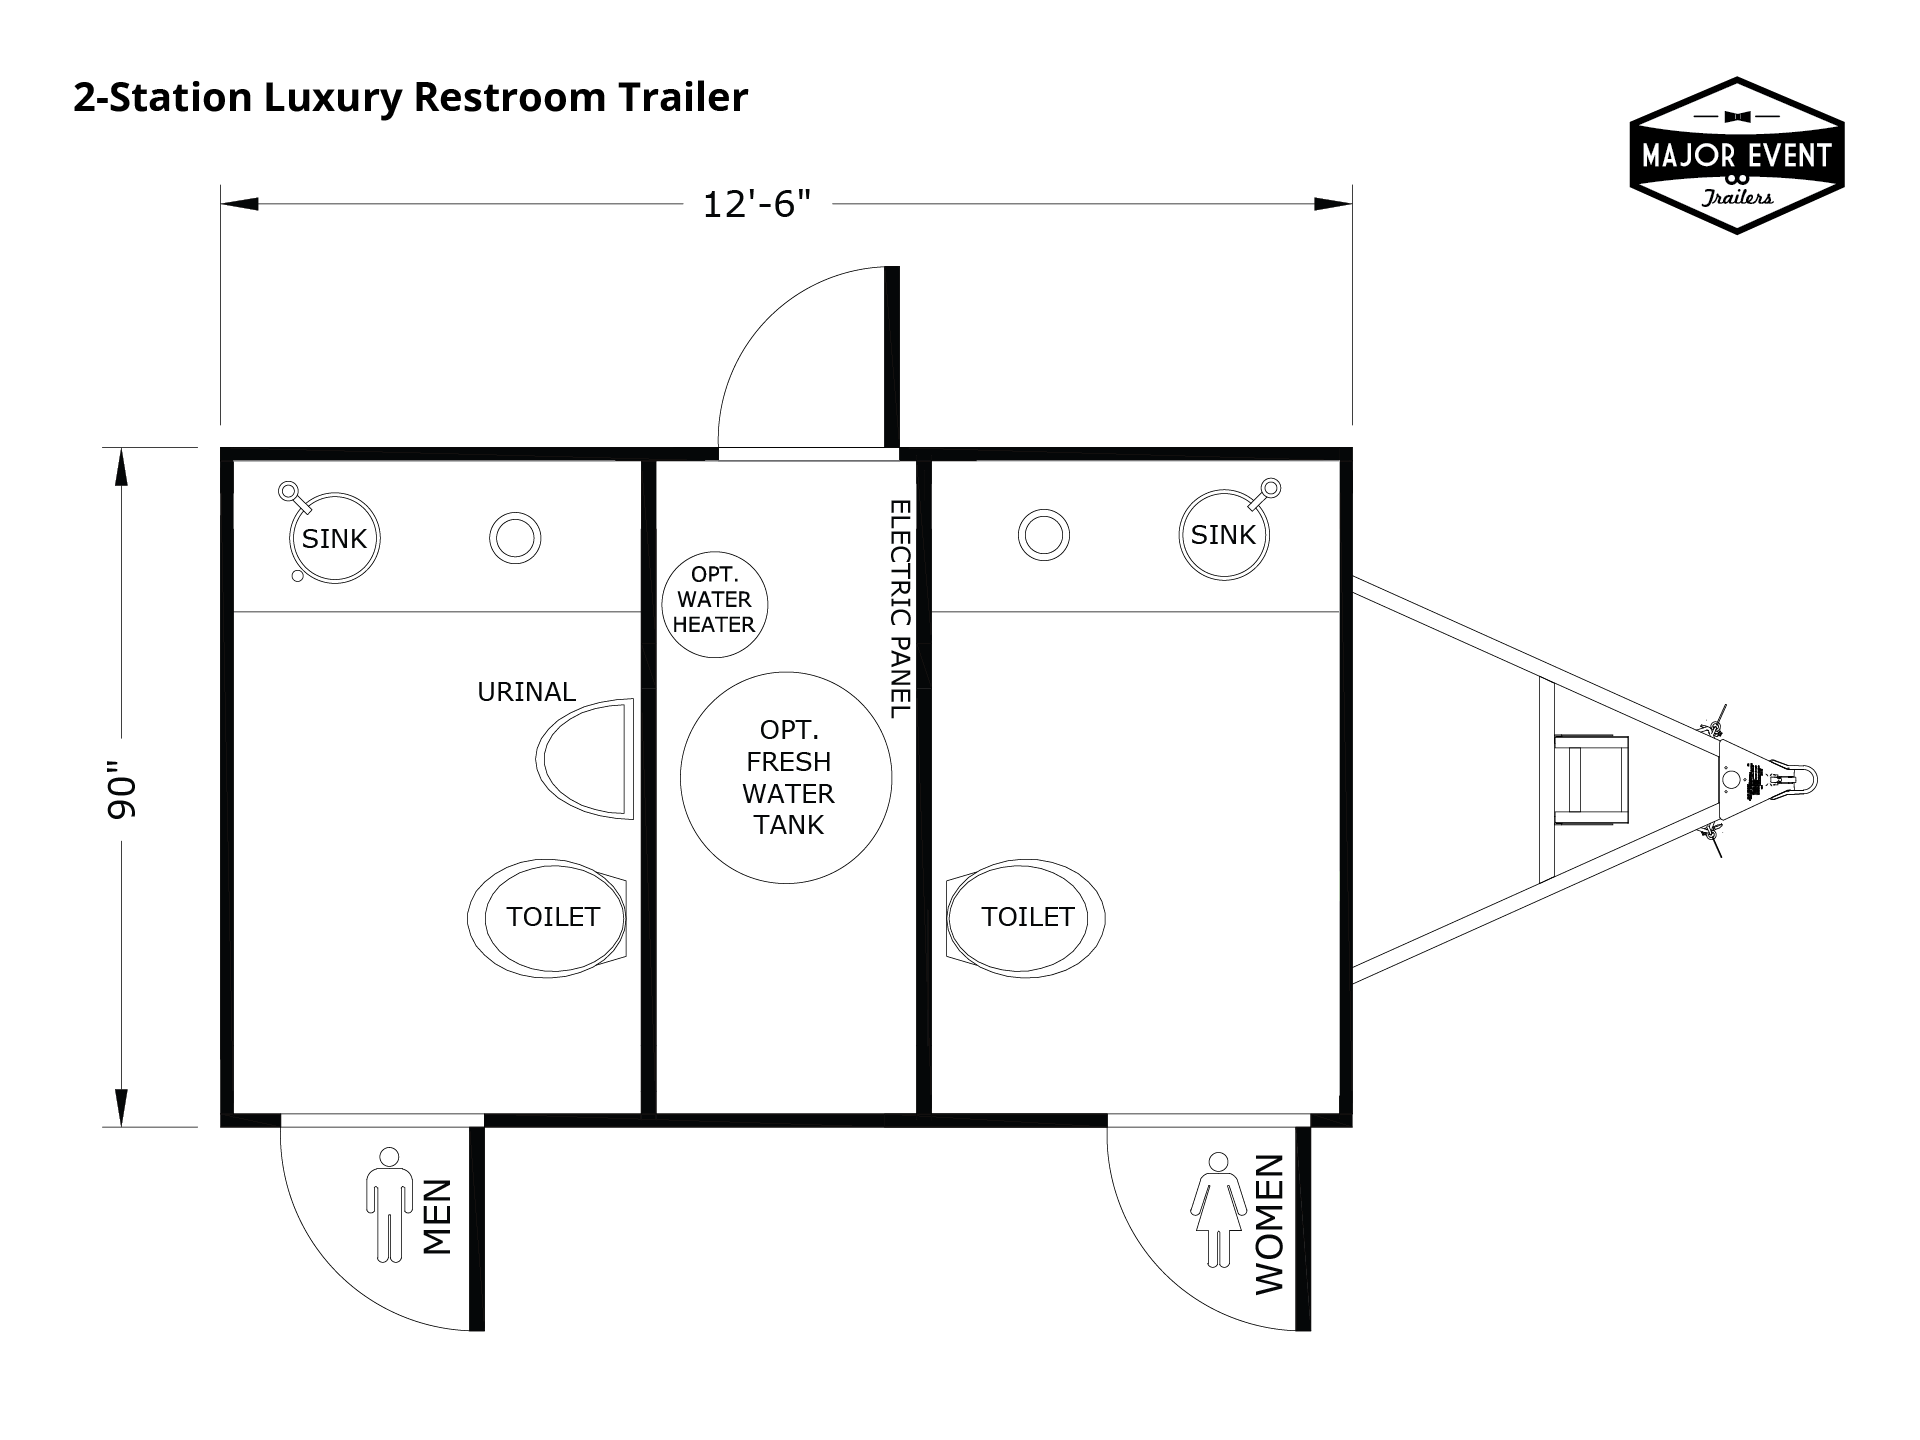 2-Station Luxury Restroom Trailer – Trailer Diagram View